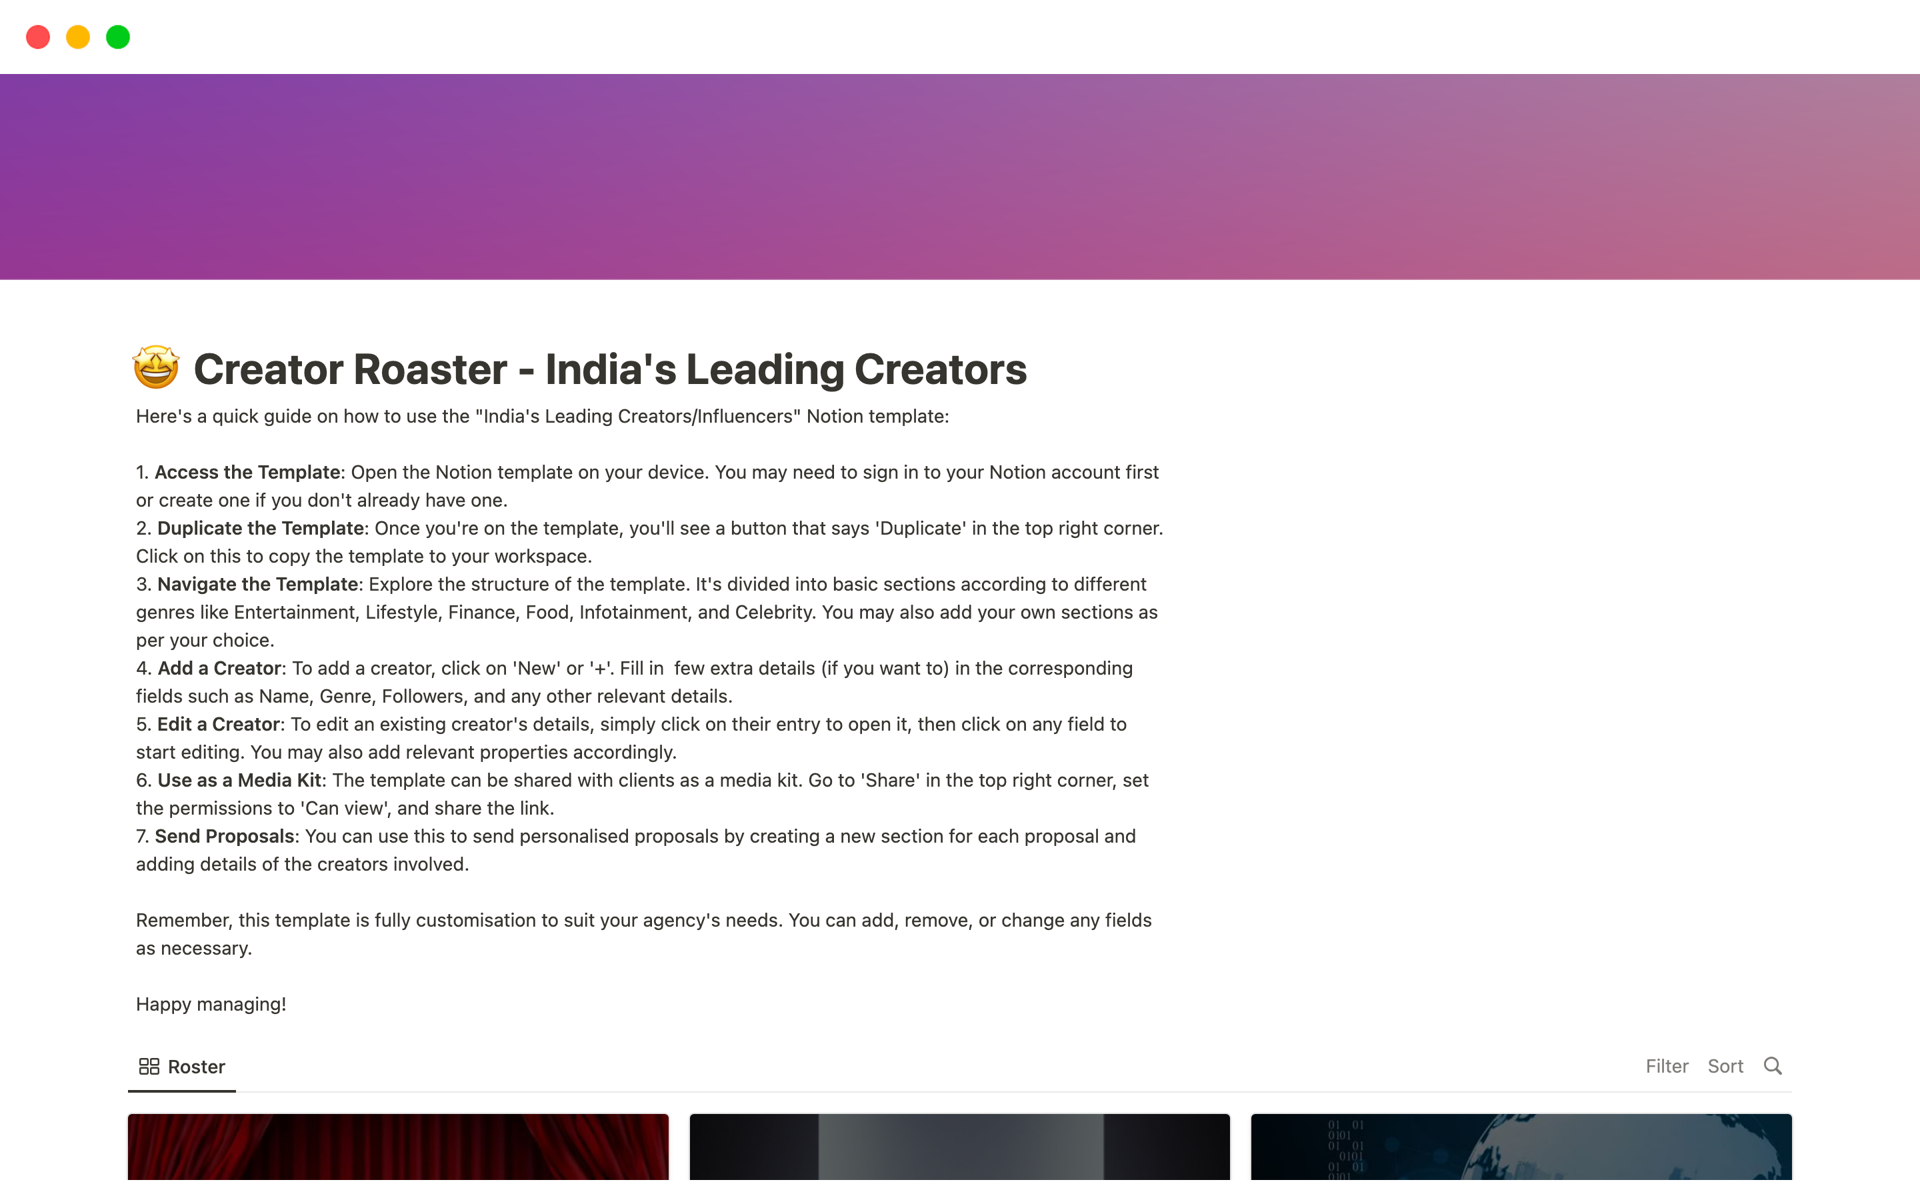 The Creator Roster - India's Leading Creators님의 템플릿 미리보기